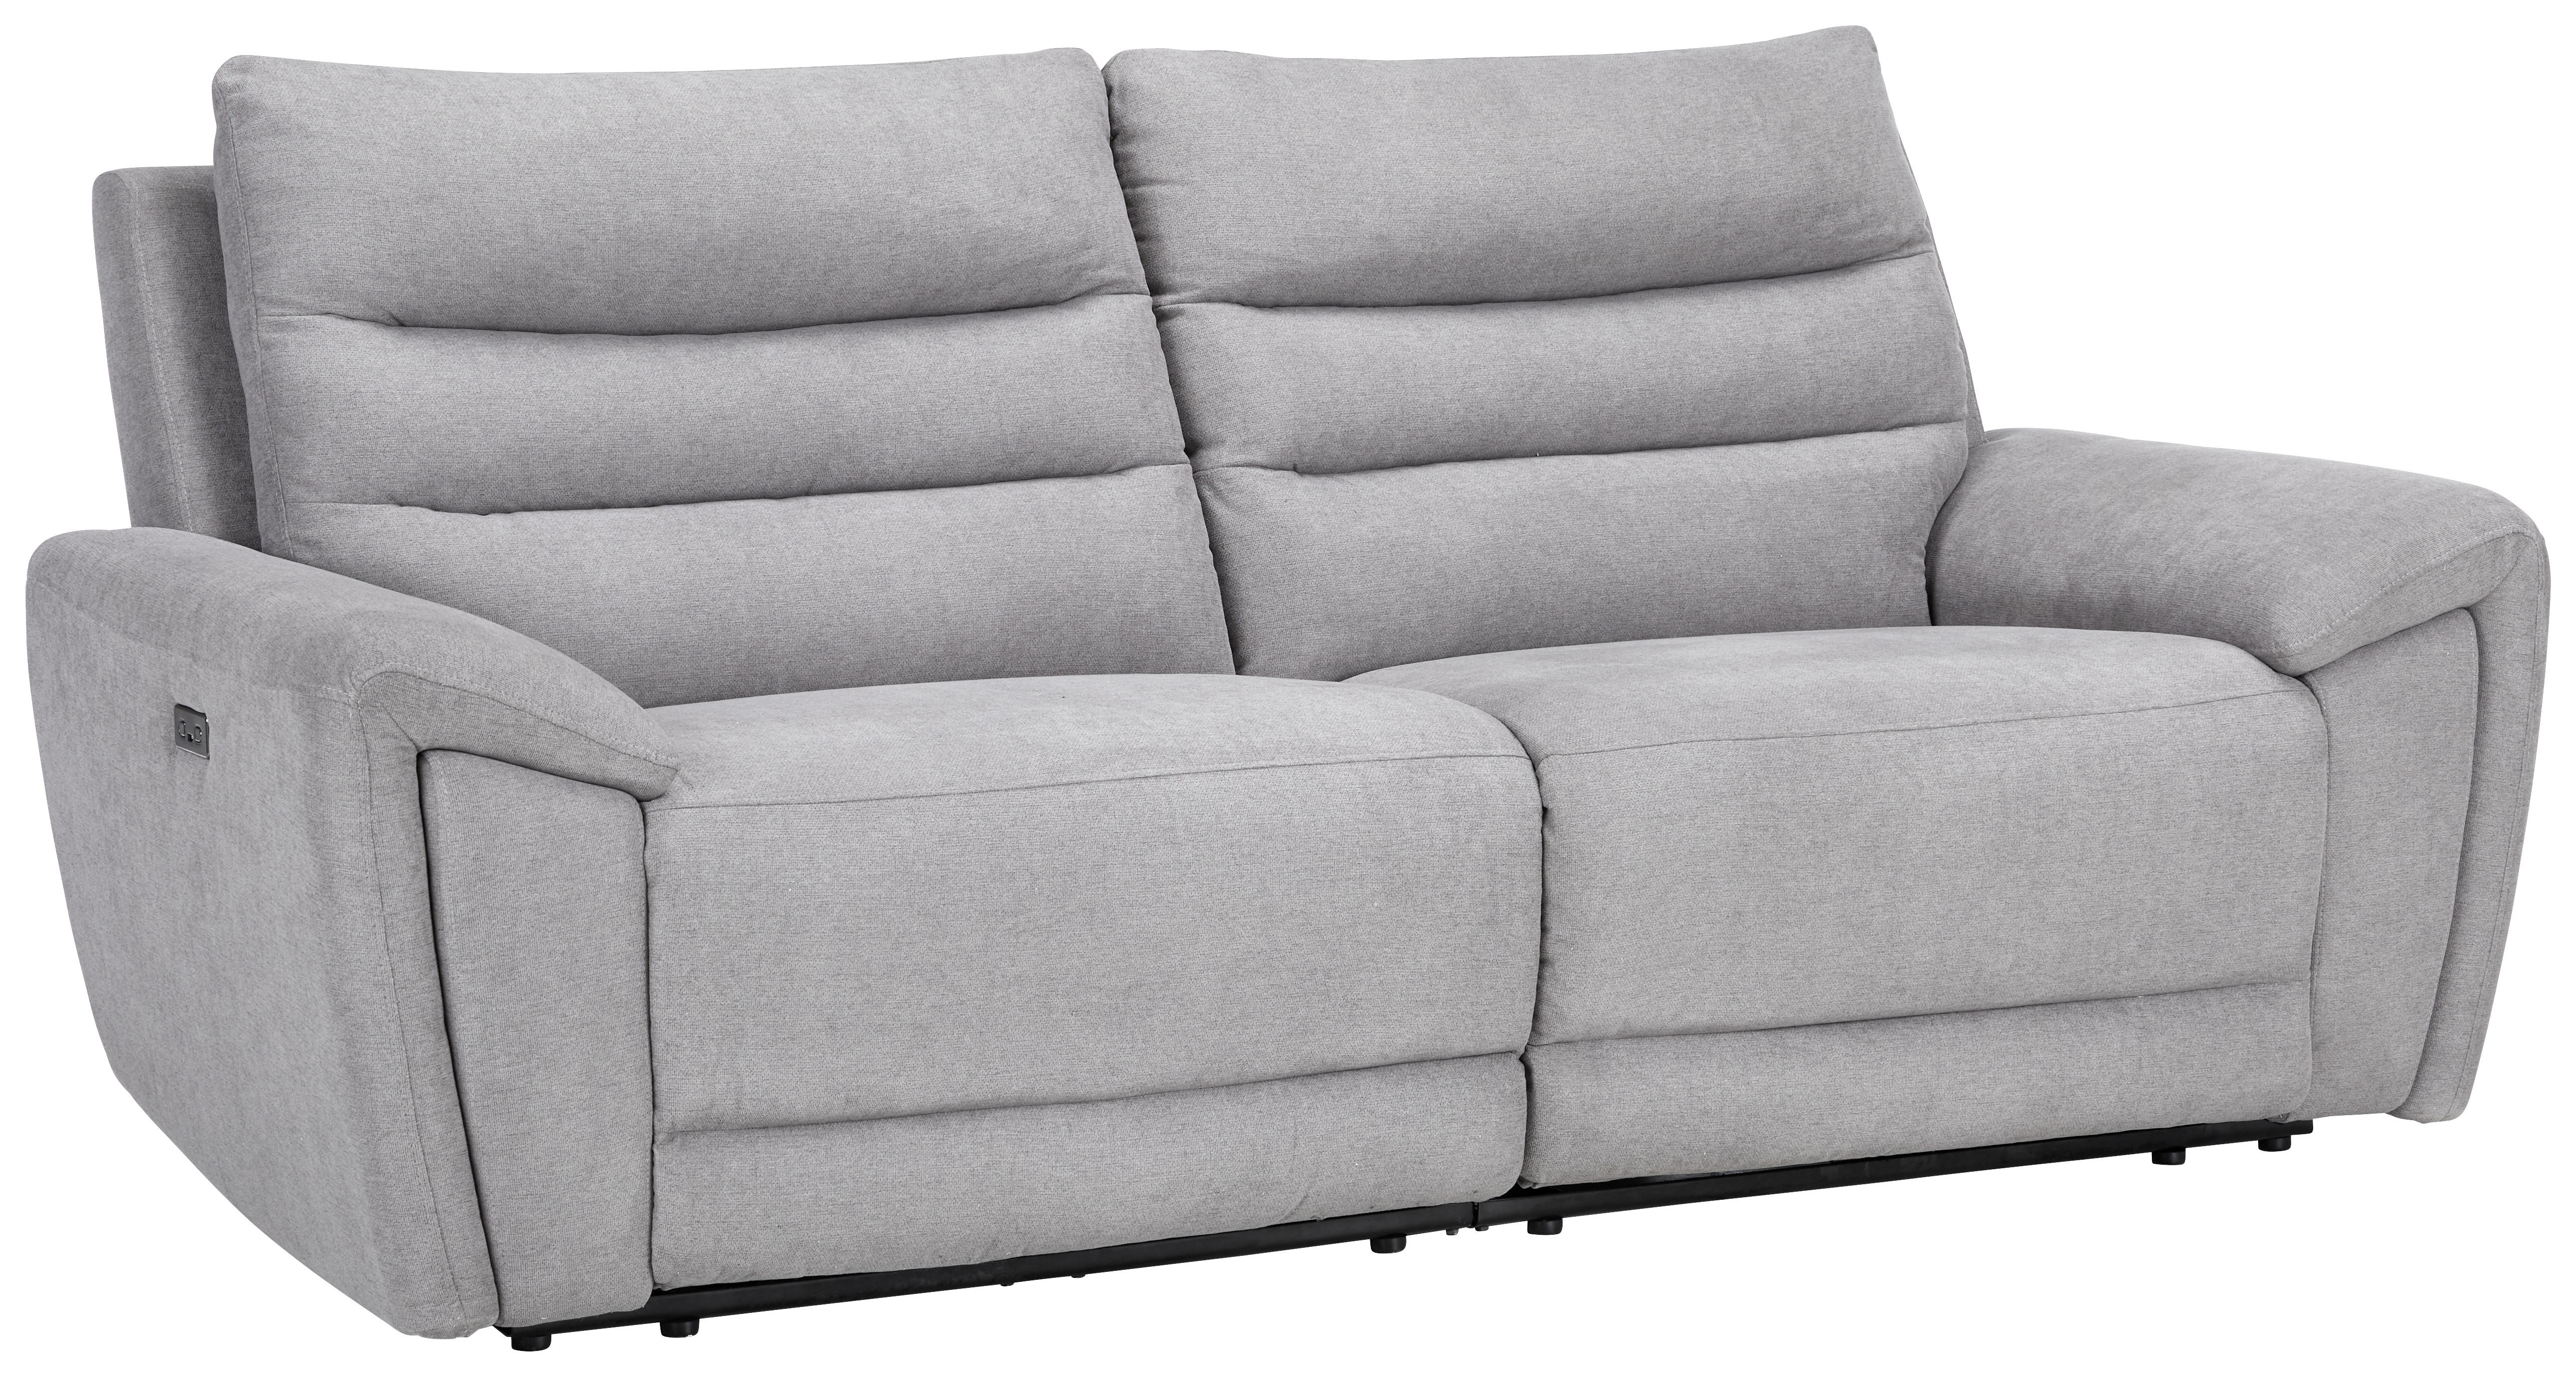 Sofa in Grau mit Relaxfunktion - Schwarz/Grau, KONVENTIONELL, Holz/Textil (213/100/94cm) - Based